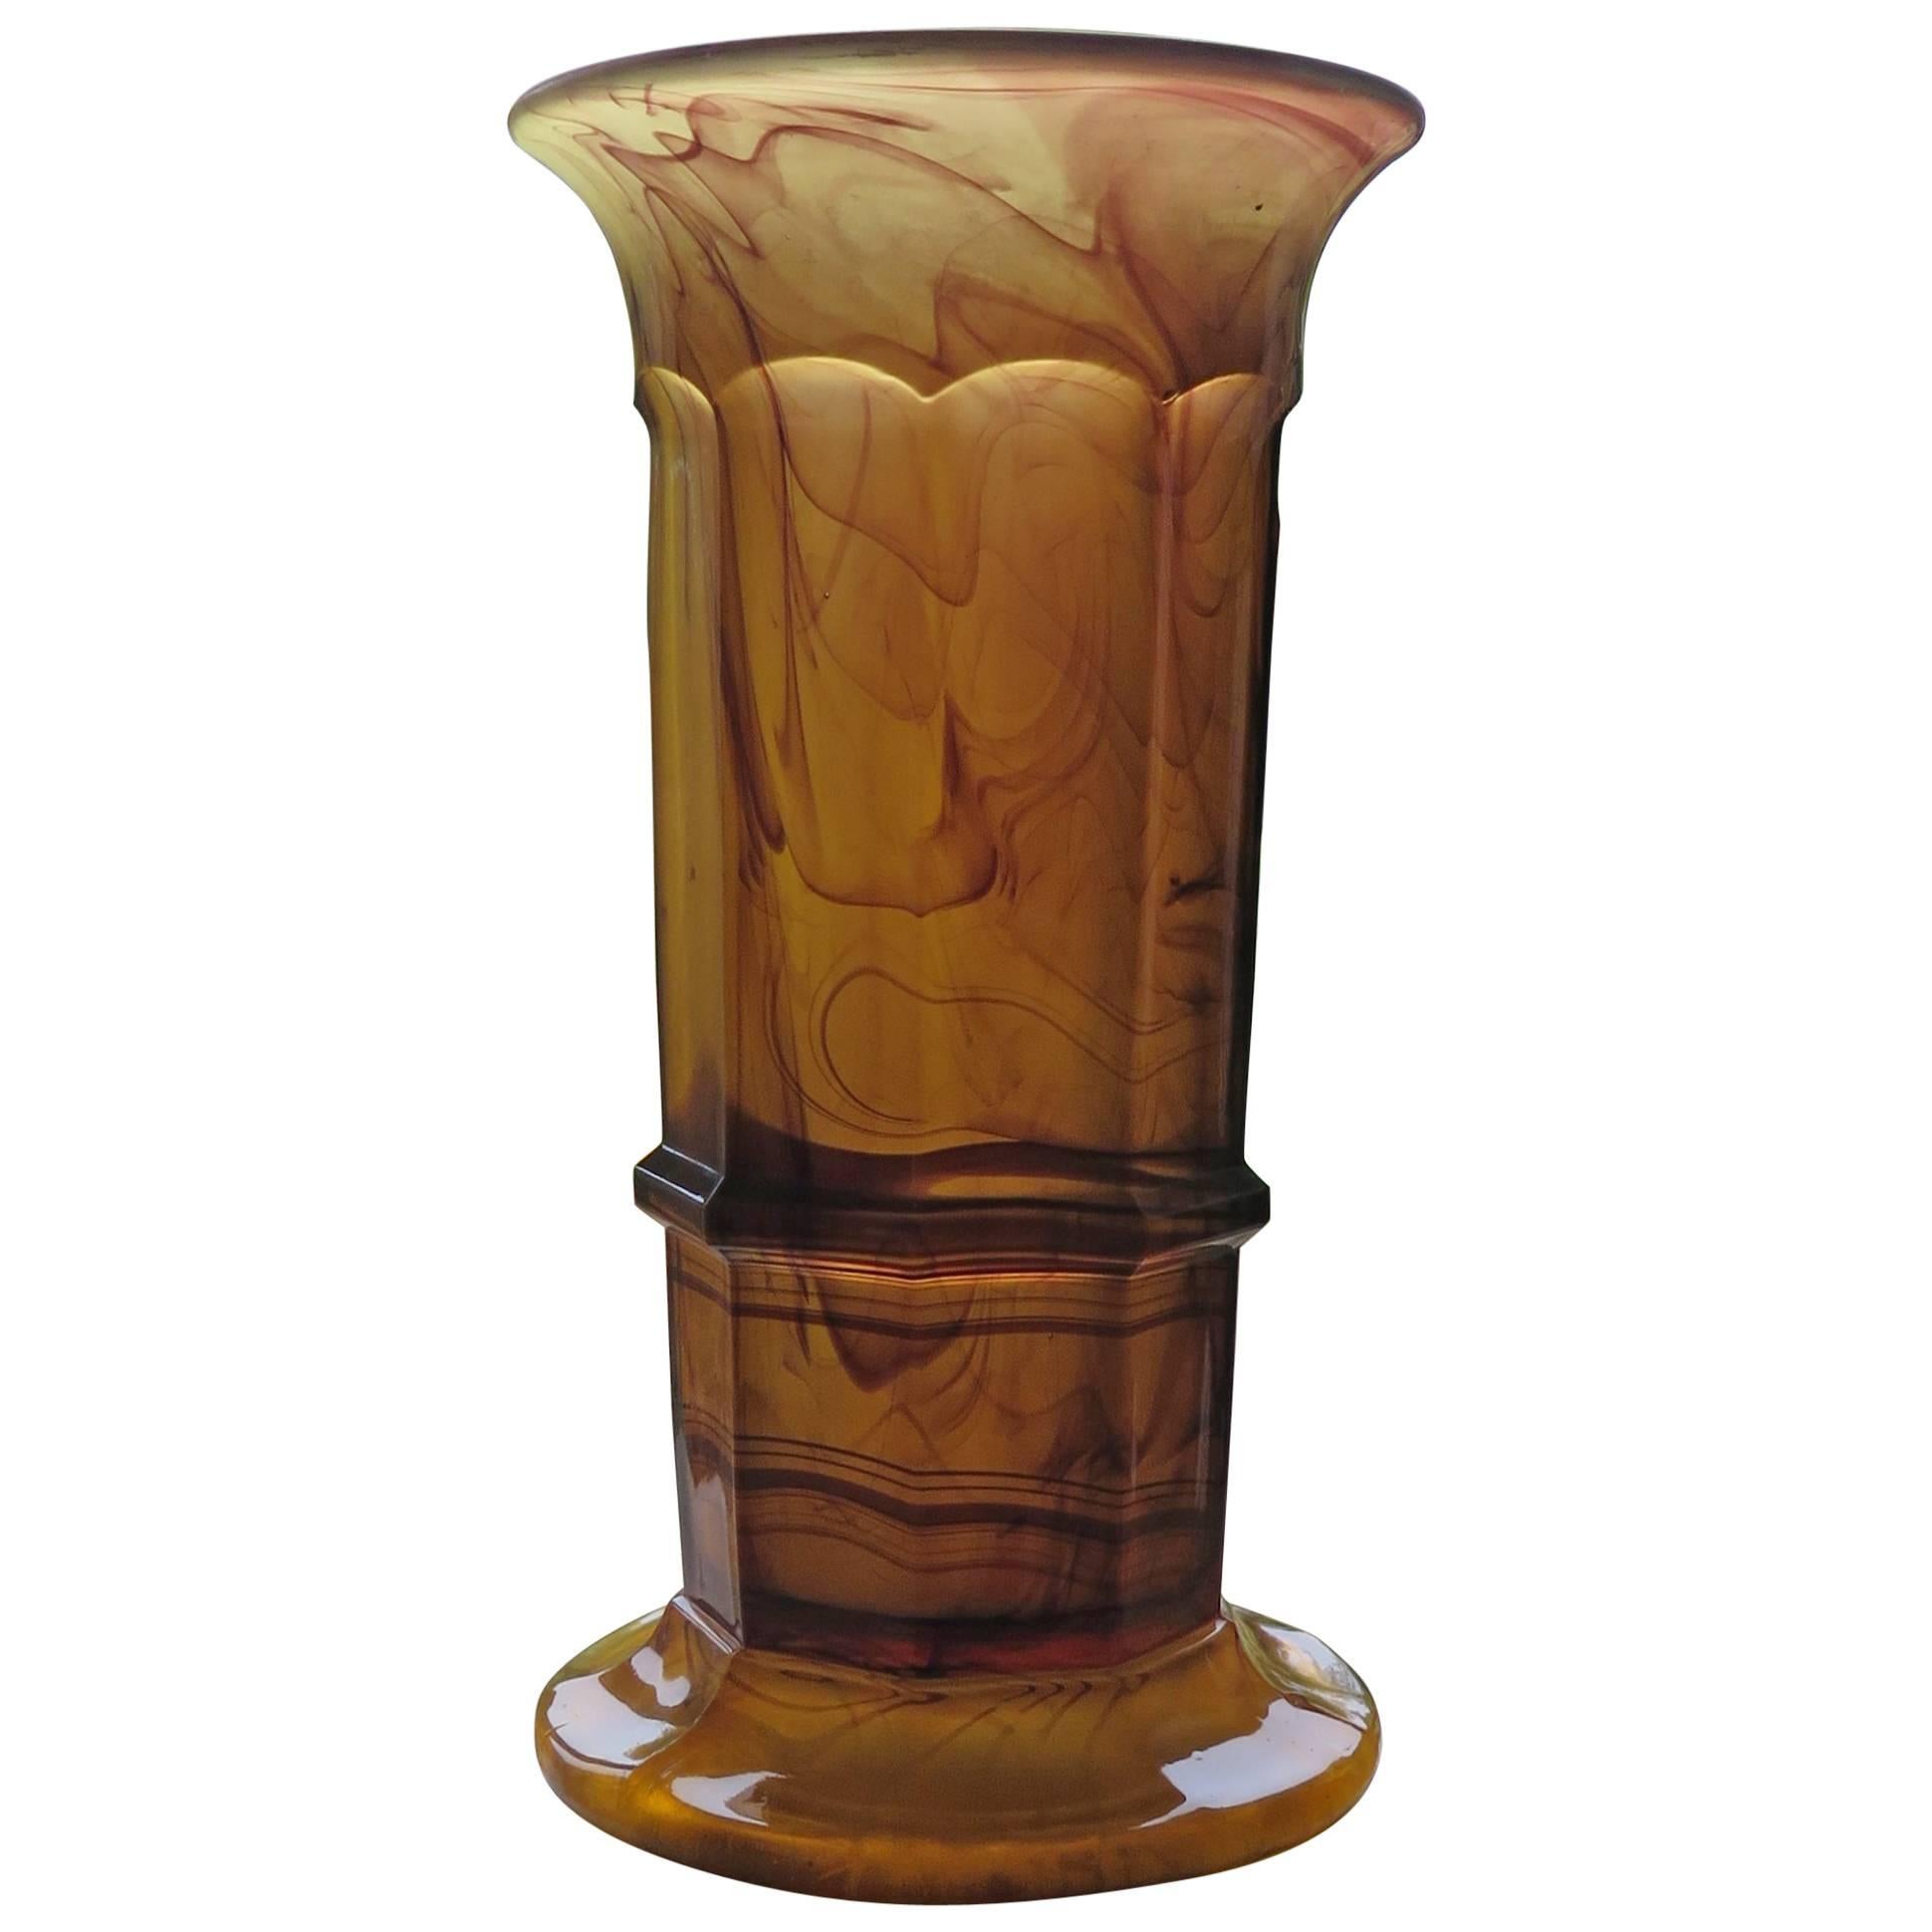 George Davidson, Cloud Glass Column Vase, Amber, Art Deco Period, circa 1930s